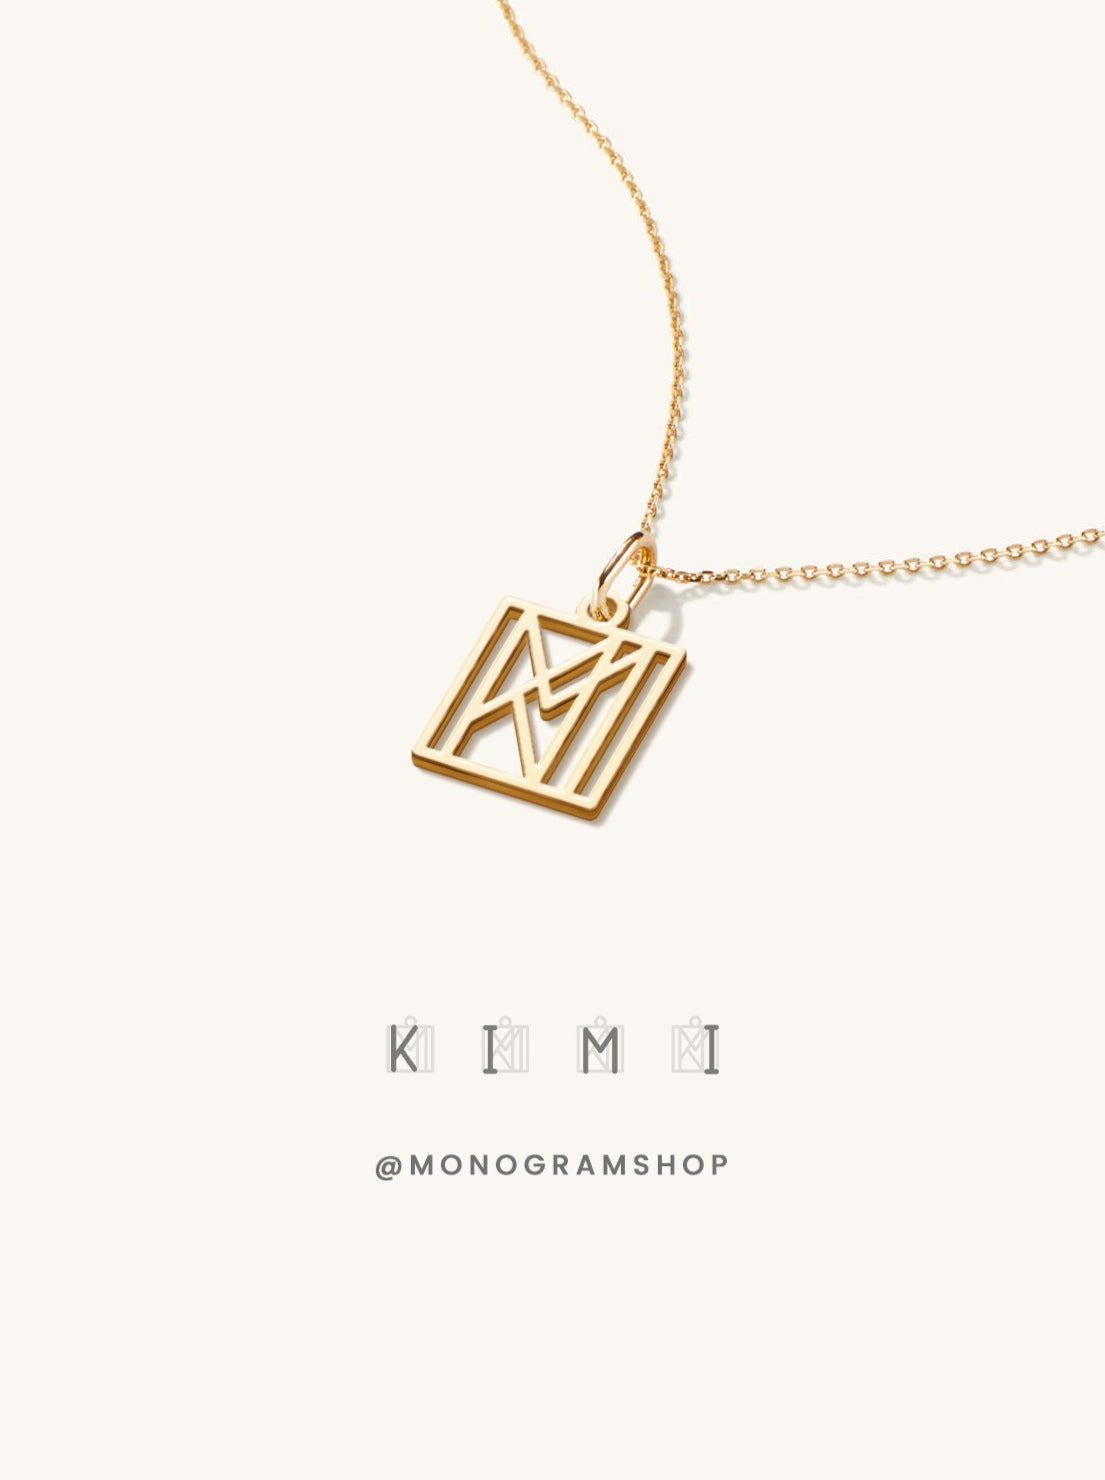 18k Gold Monogram Necklace